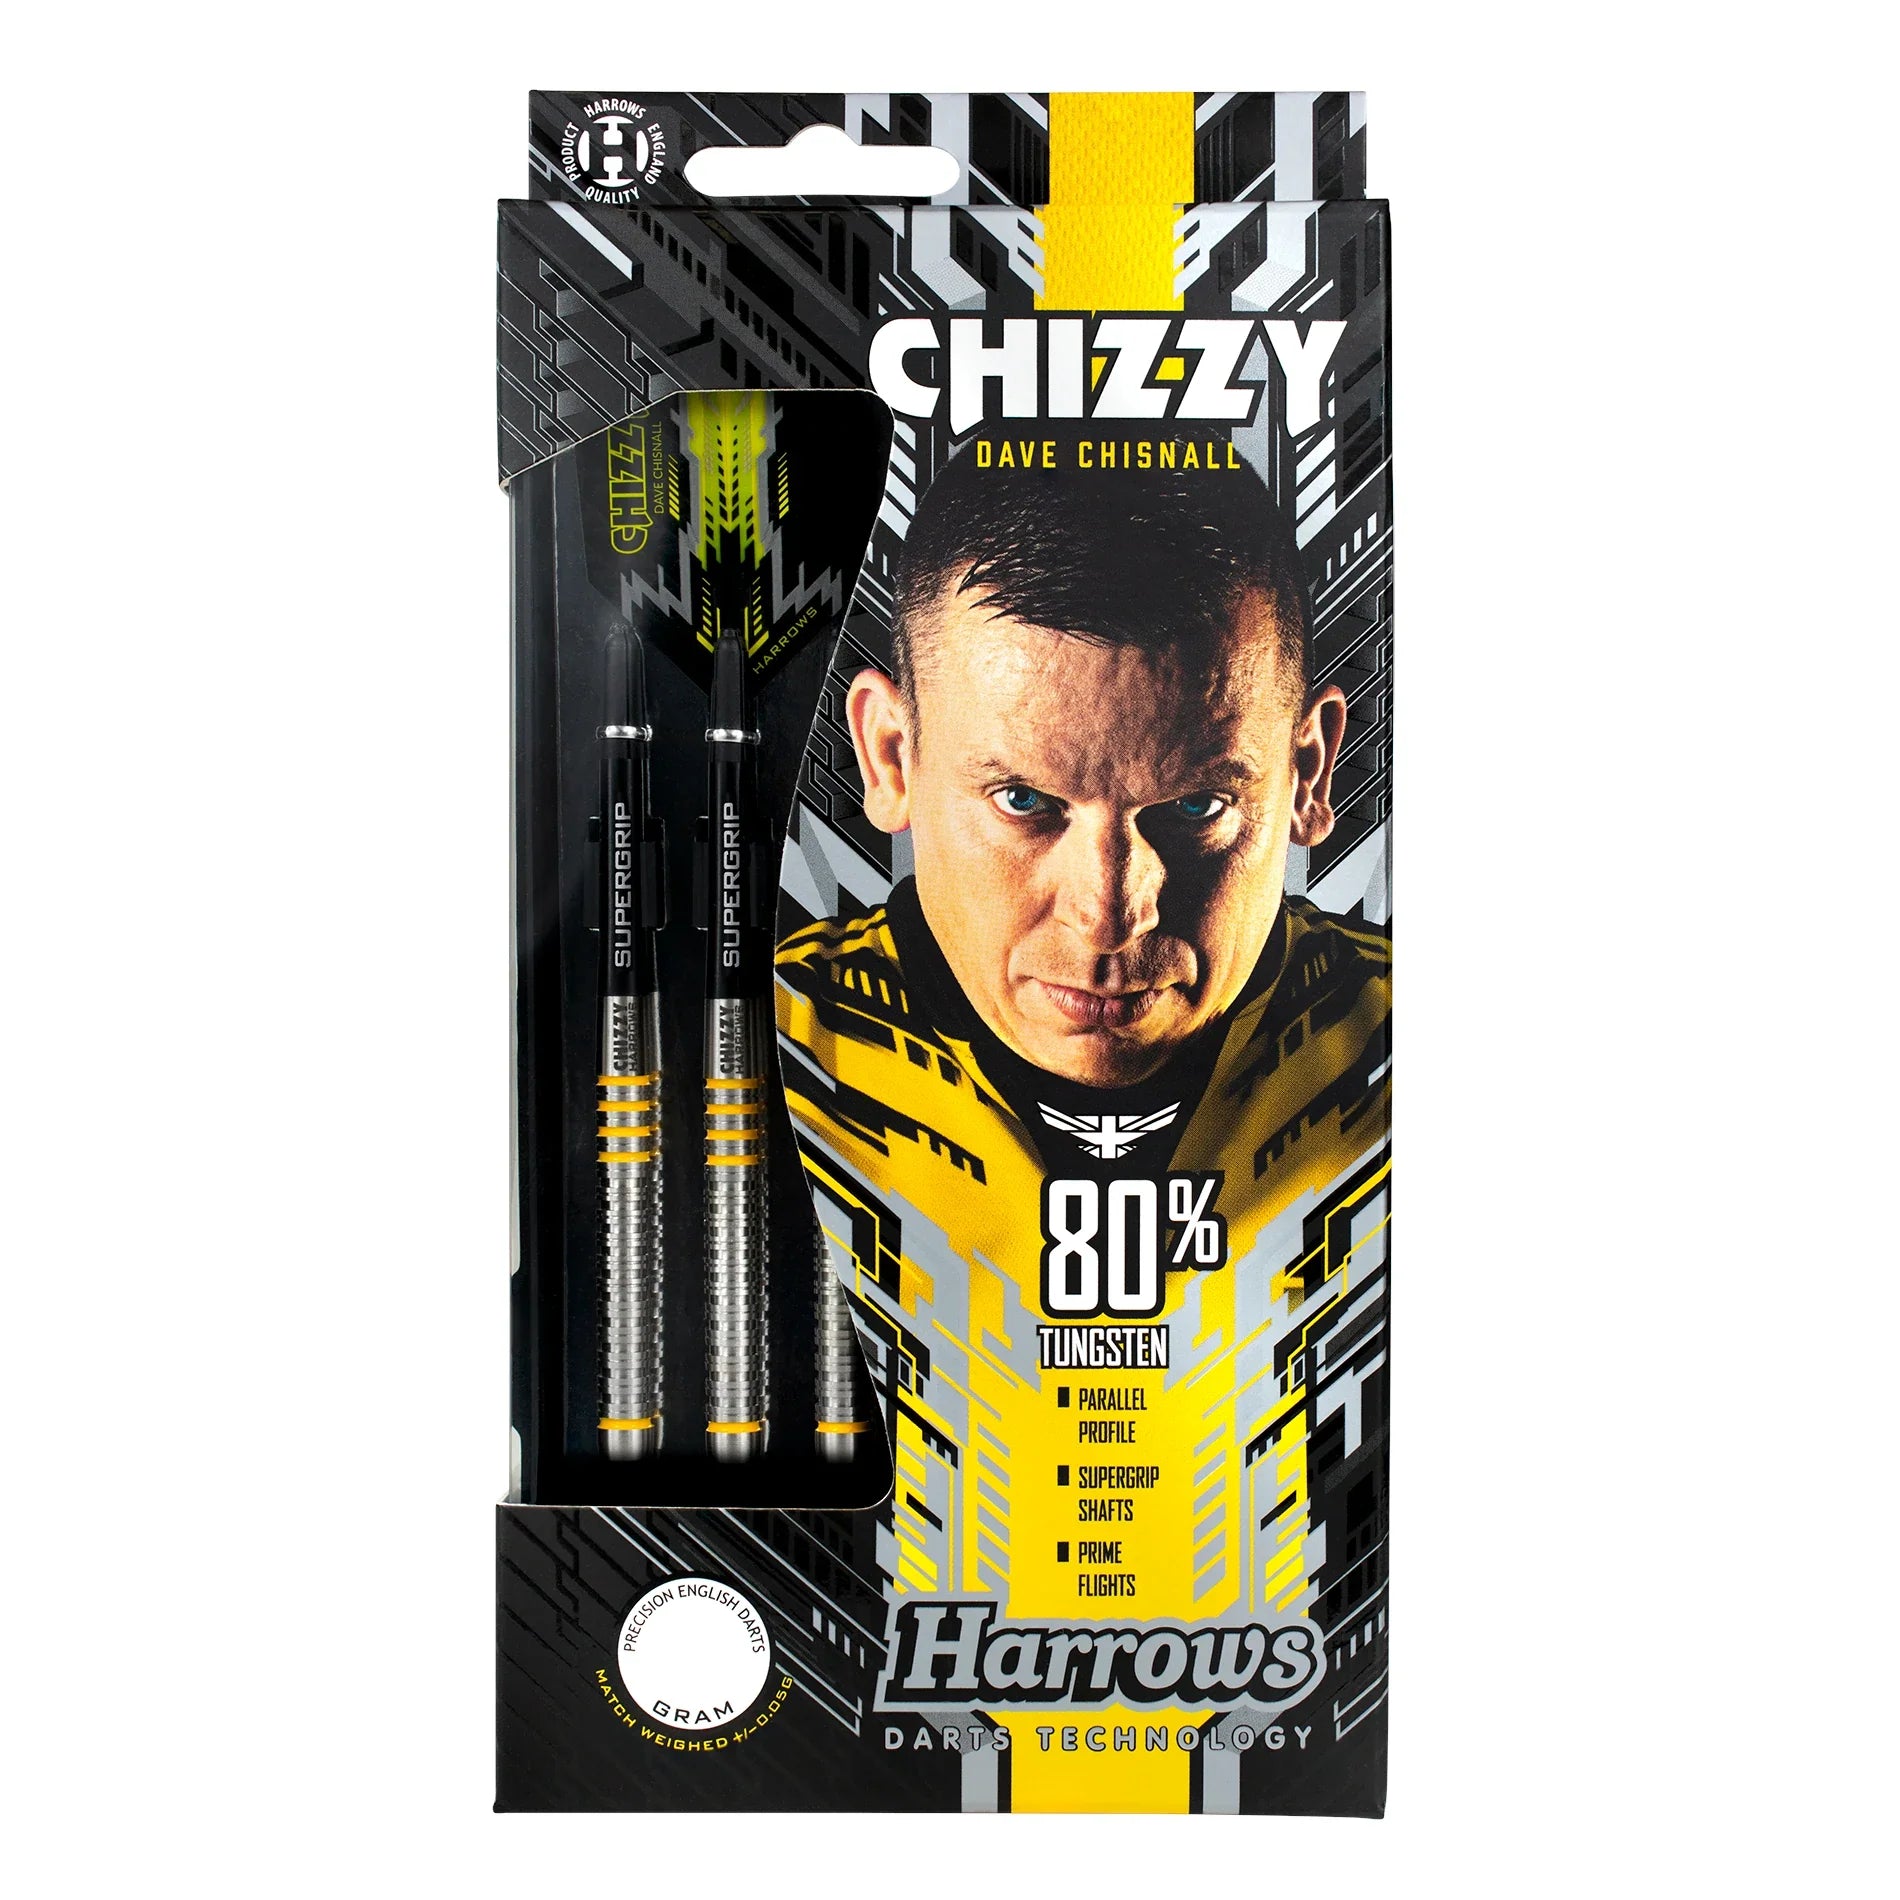 Harrows Chizzy 80 23g Darts